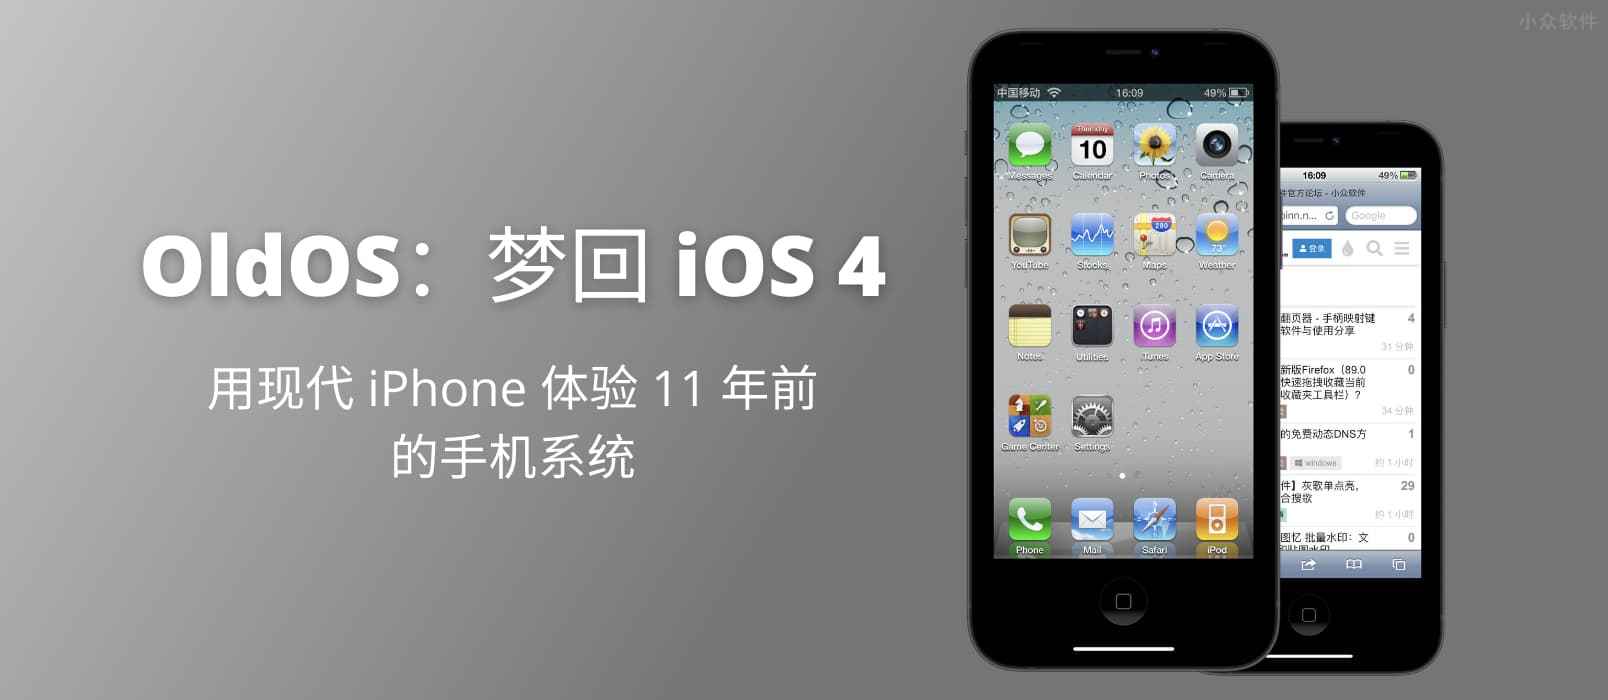 OldOS - 梦回 iOS 4，用现代 iPhone 体验 11 年前的手机系统